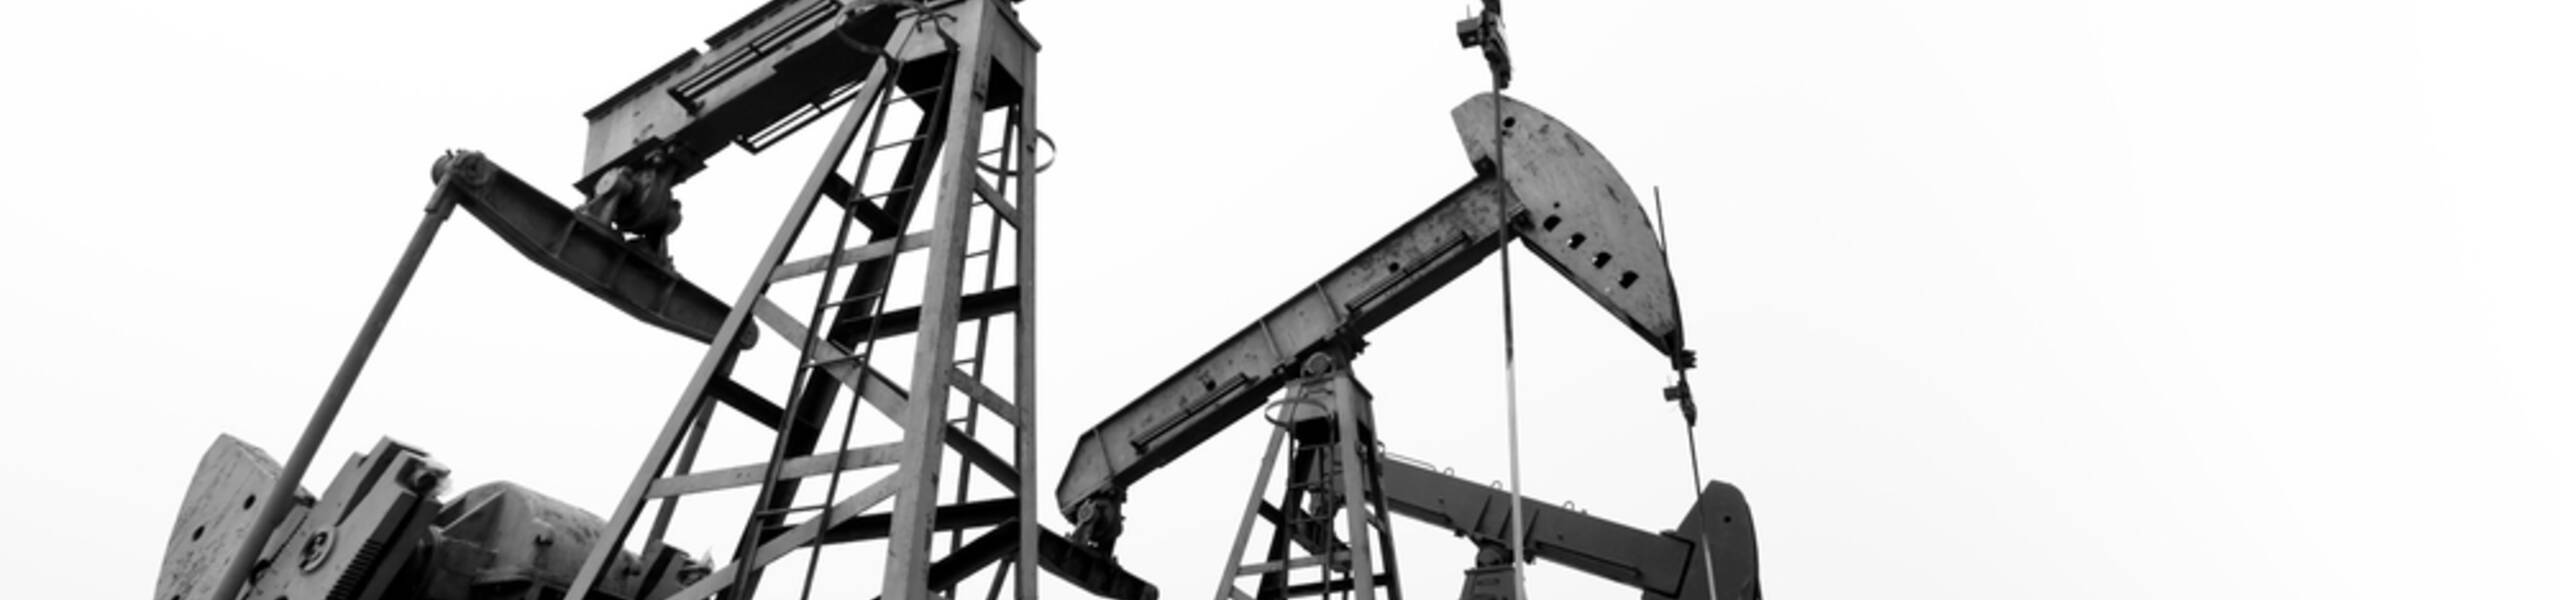 Brent: OPEC+ Might Intervene